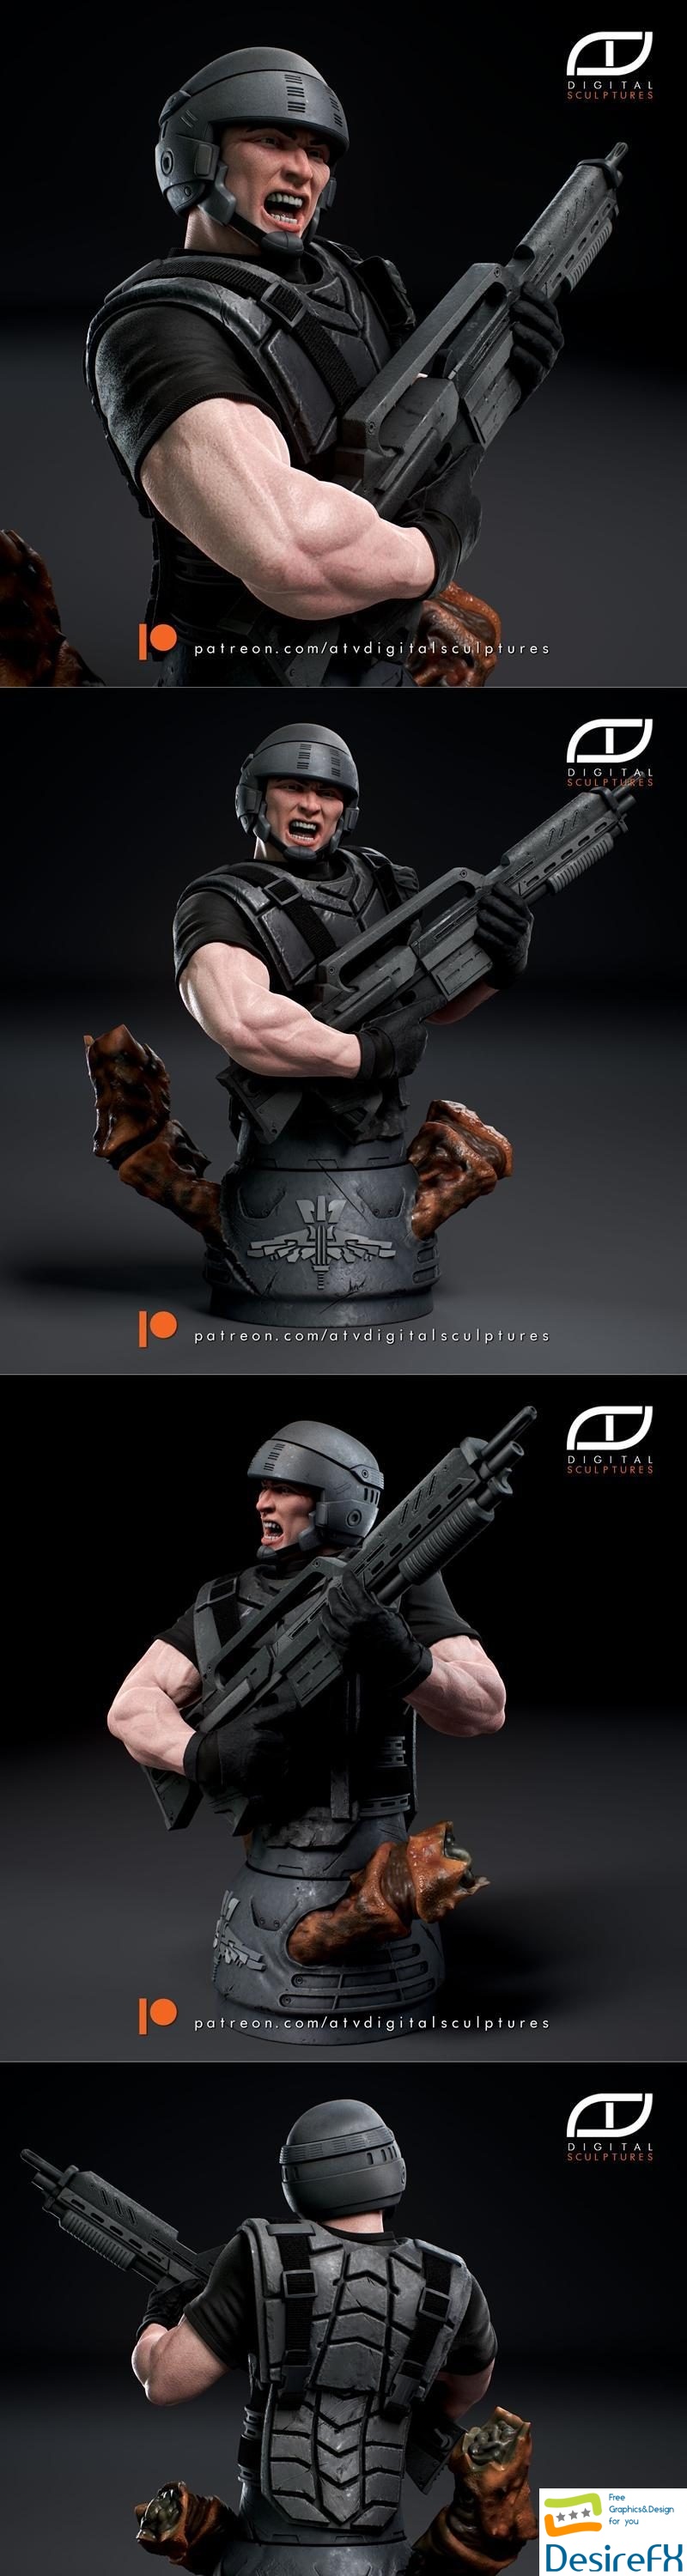 ATV Digital Sculptures - Starship Troopers Bust 3D Print